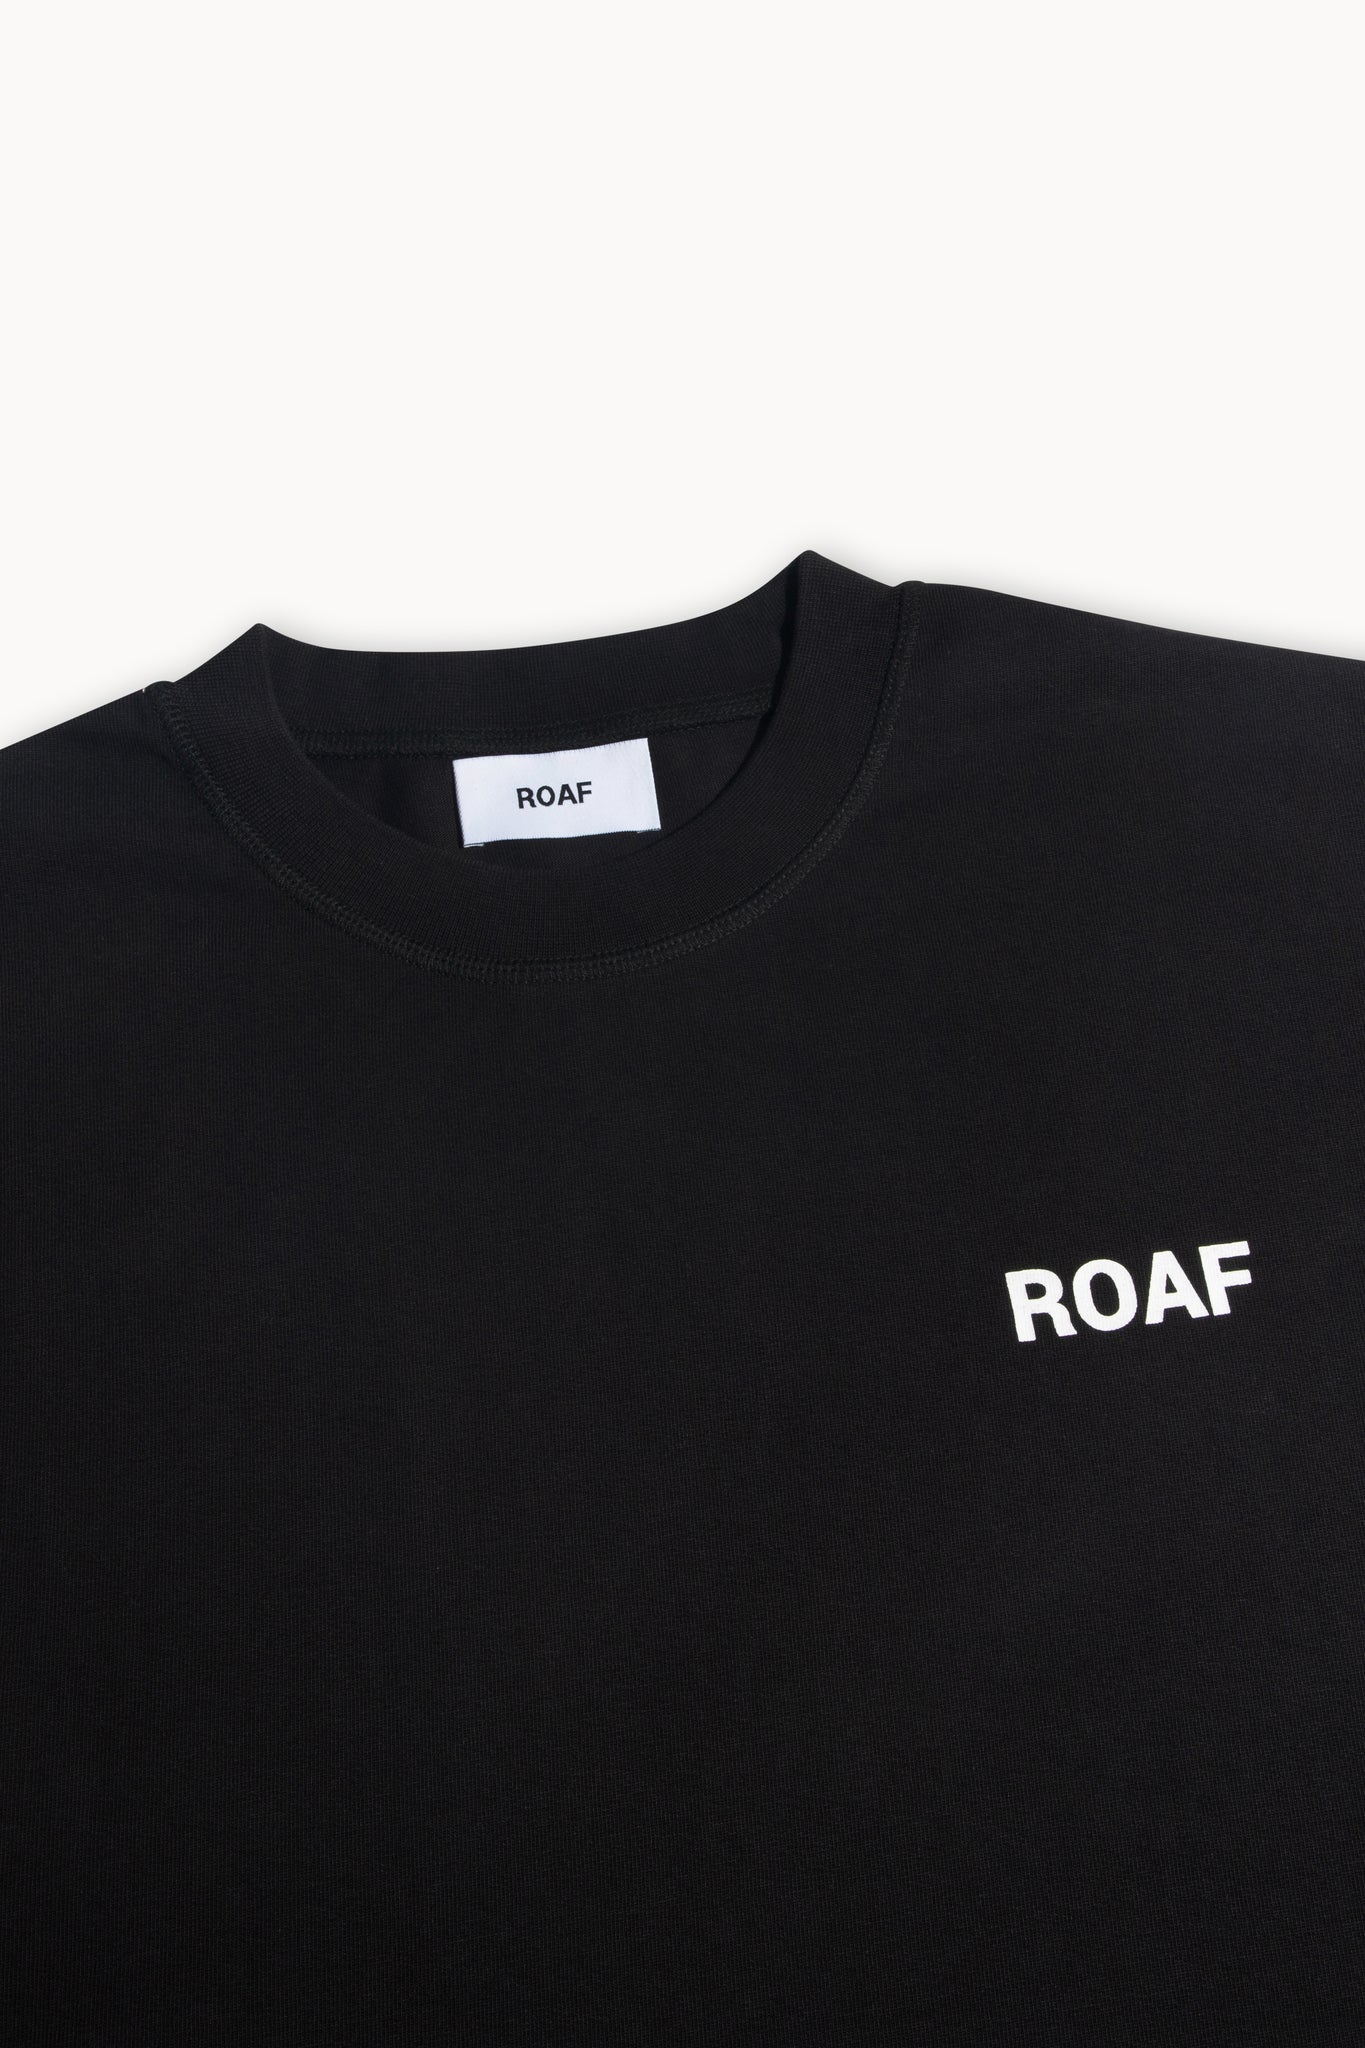 ROAF Logo Tee in Washed Black Cotton